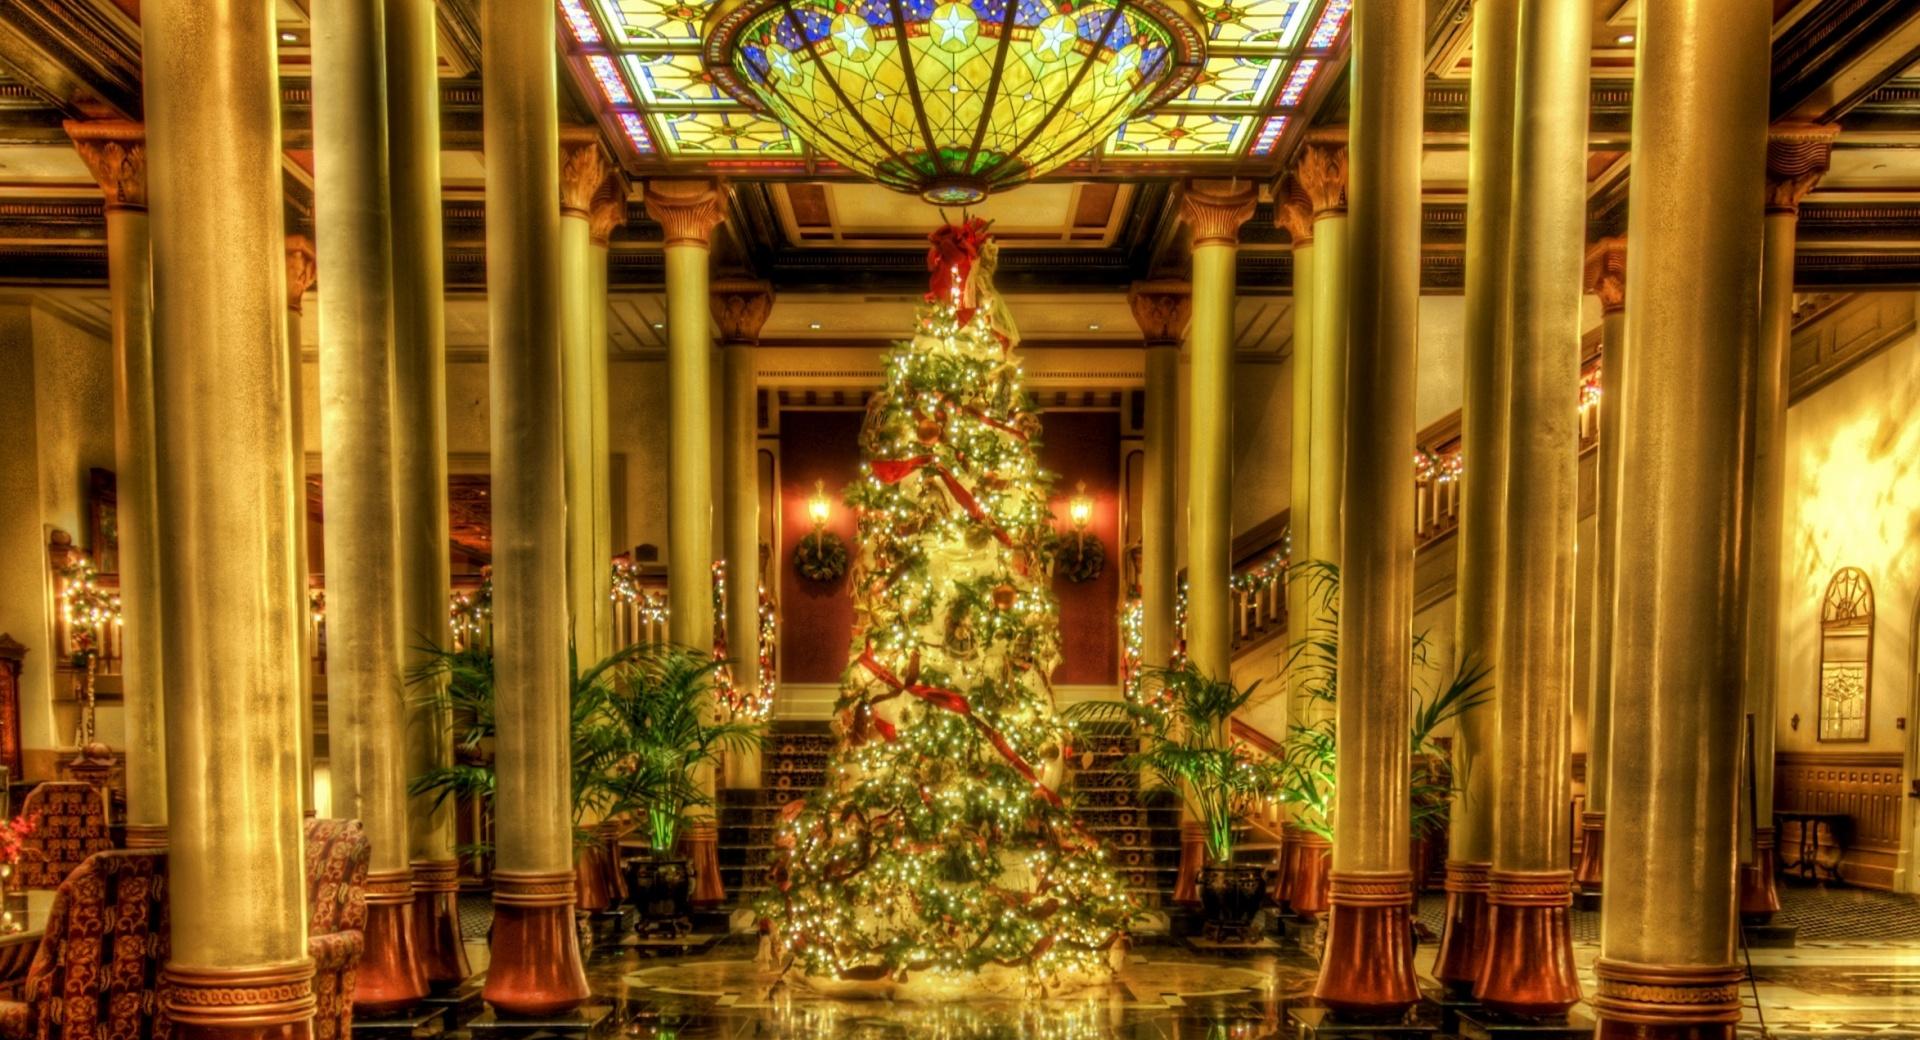 Christmas - Driskill Hotel Lobby, Texas at 1152 x 864 size wallpapers HD quality